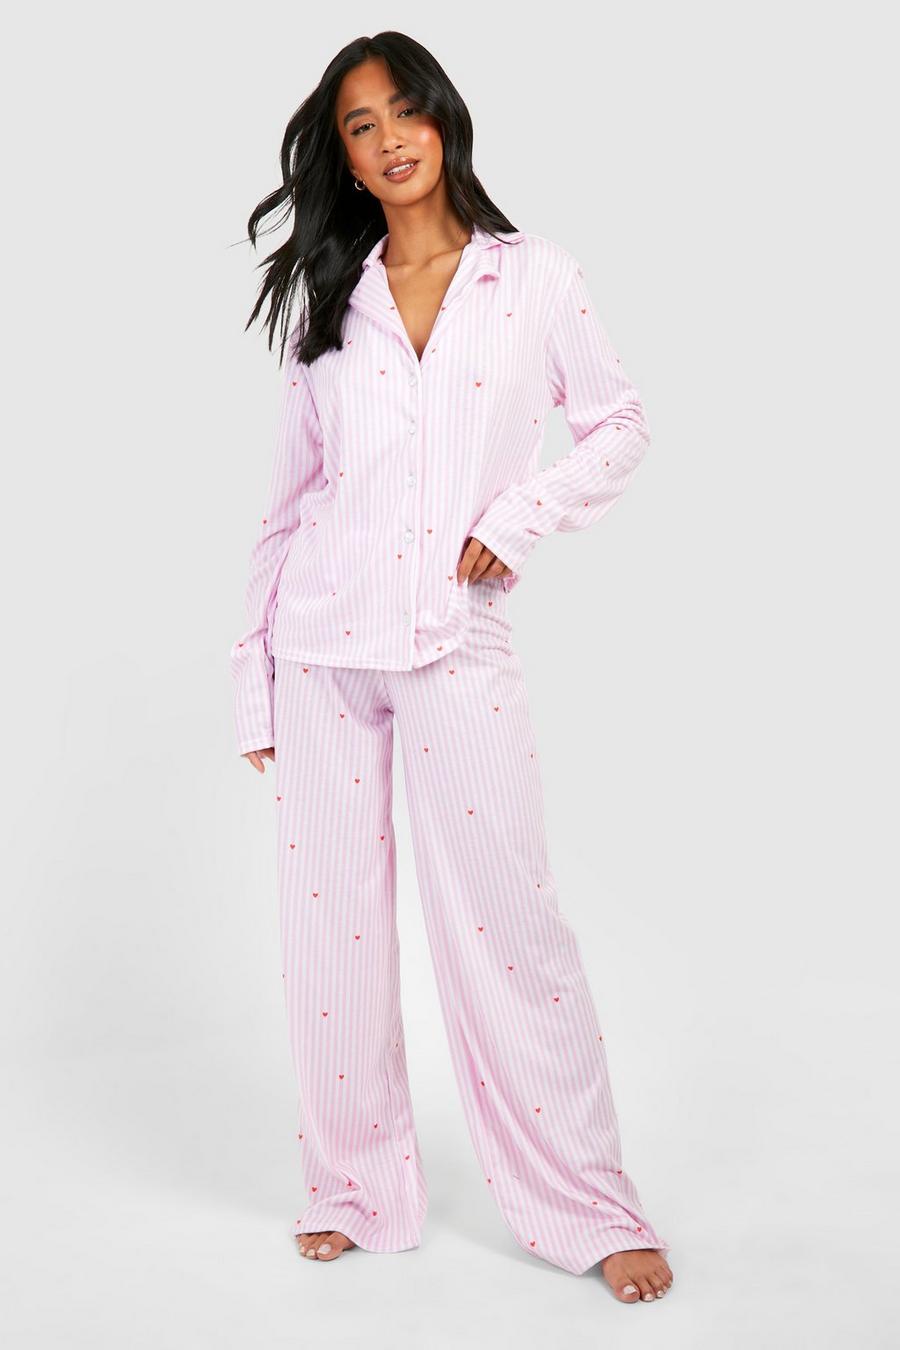 Petite Nadelstreifen Pyjama-Set mit Herz, Pink